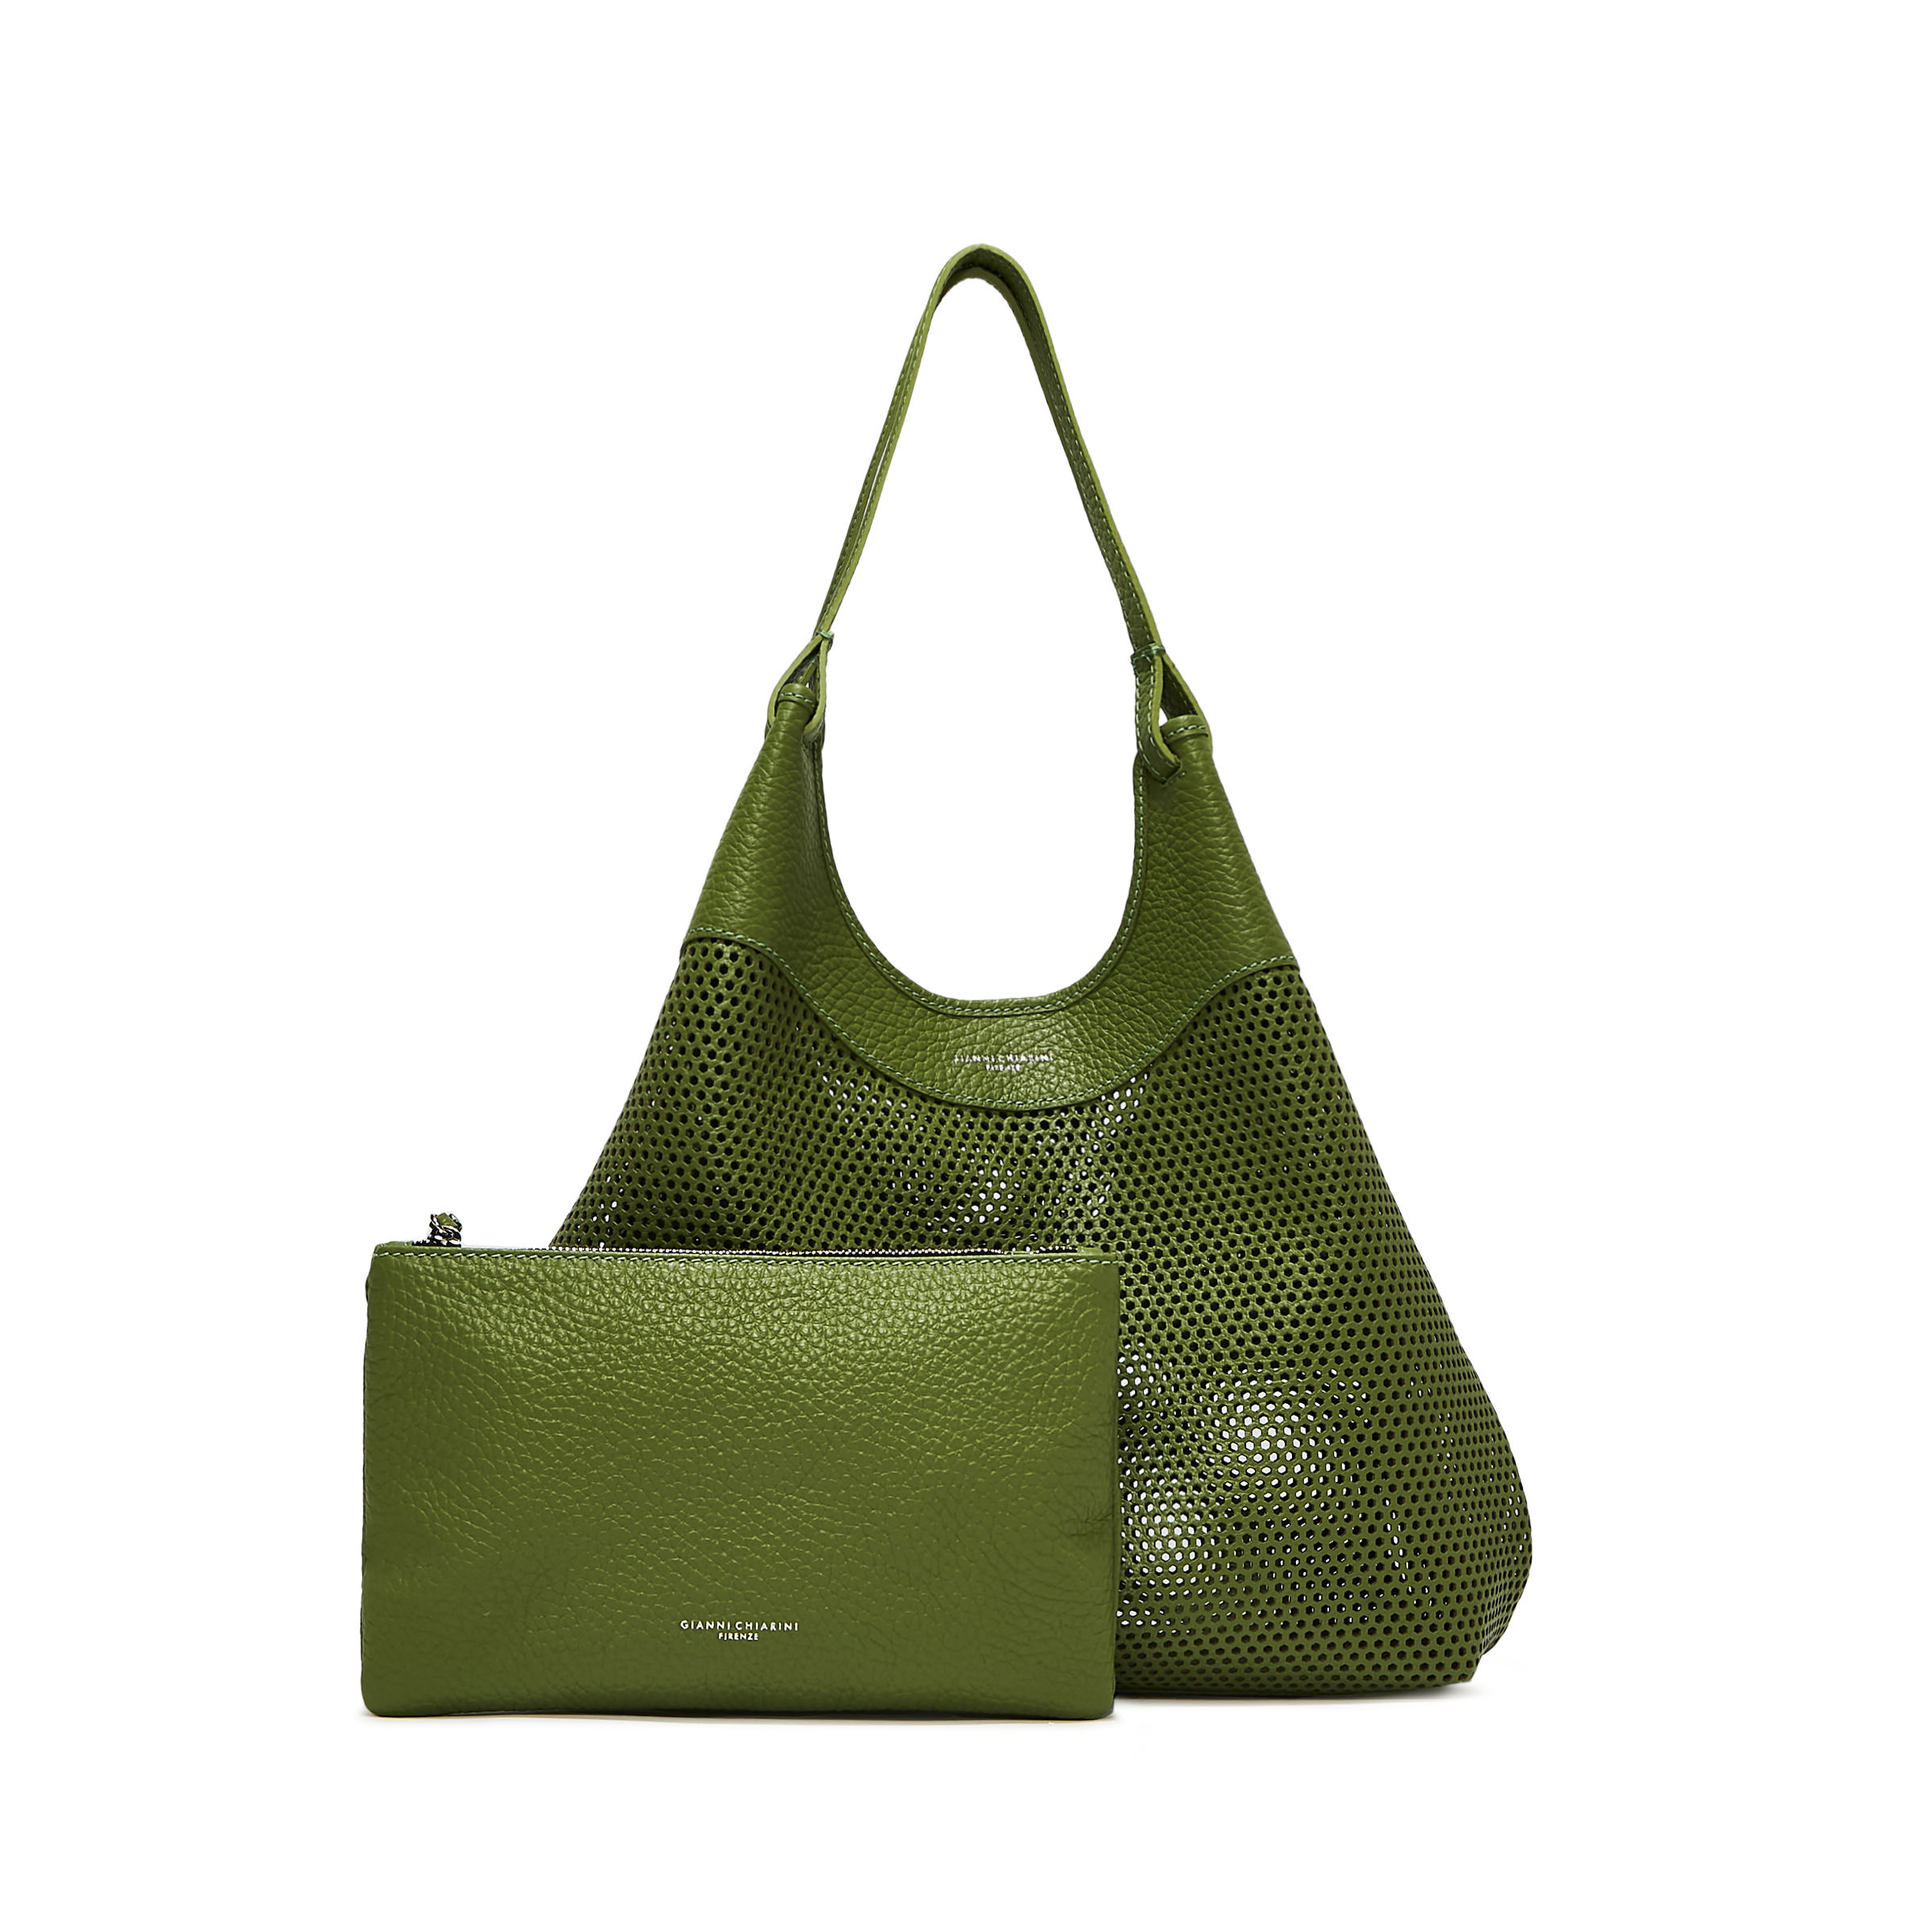 Gianni Chiarini - Dua bag in leather, Dark Green, large image number 2